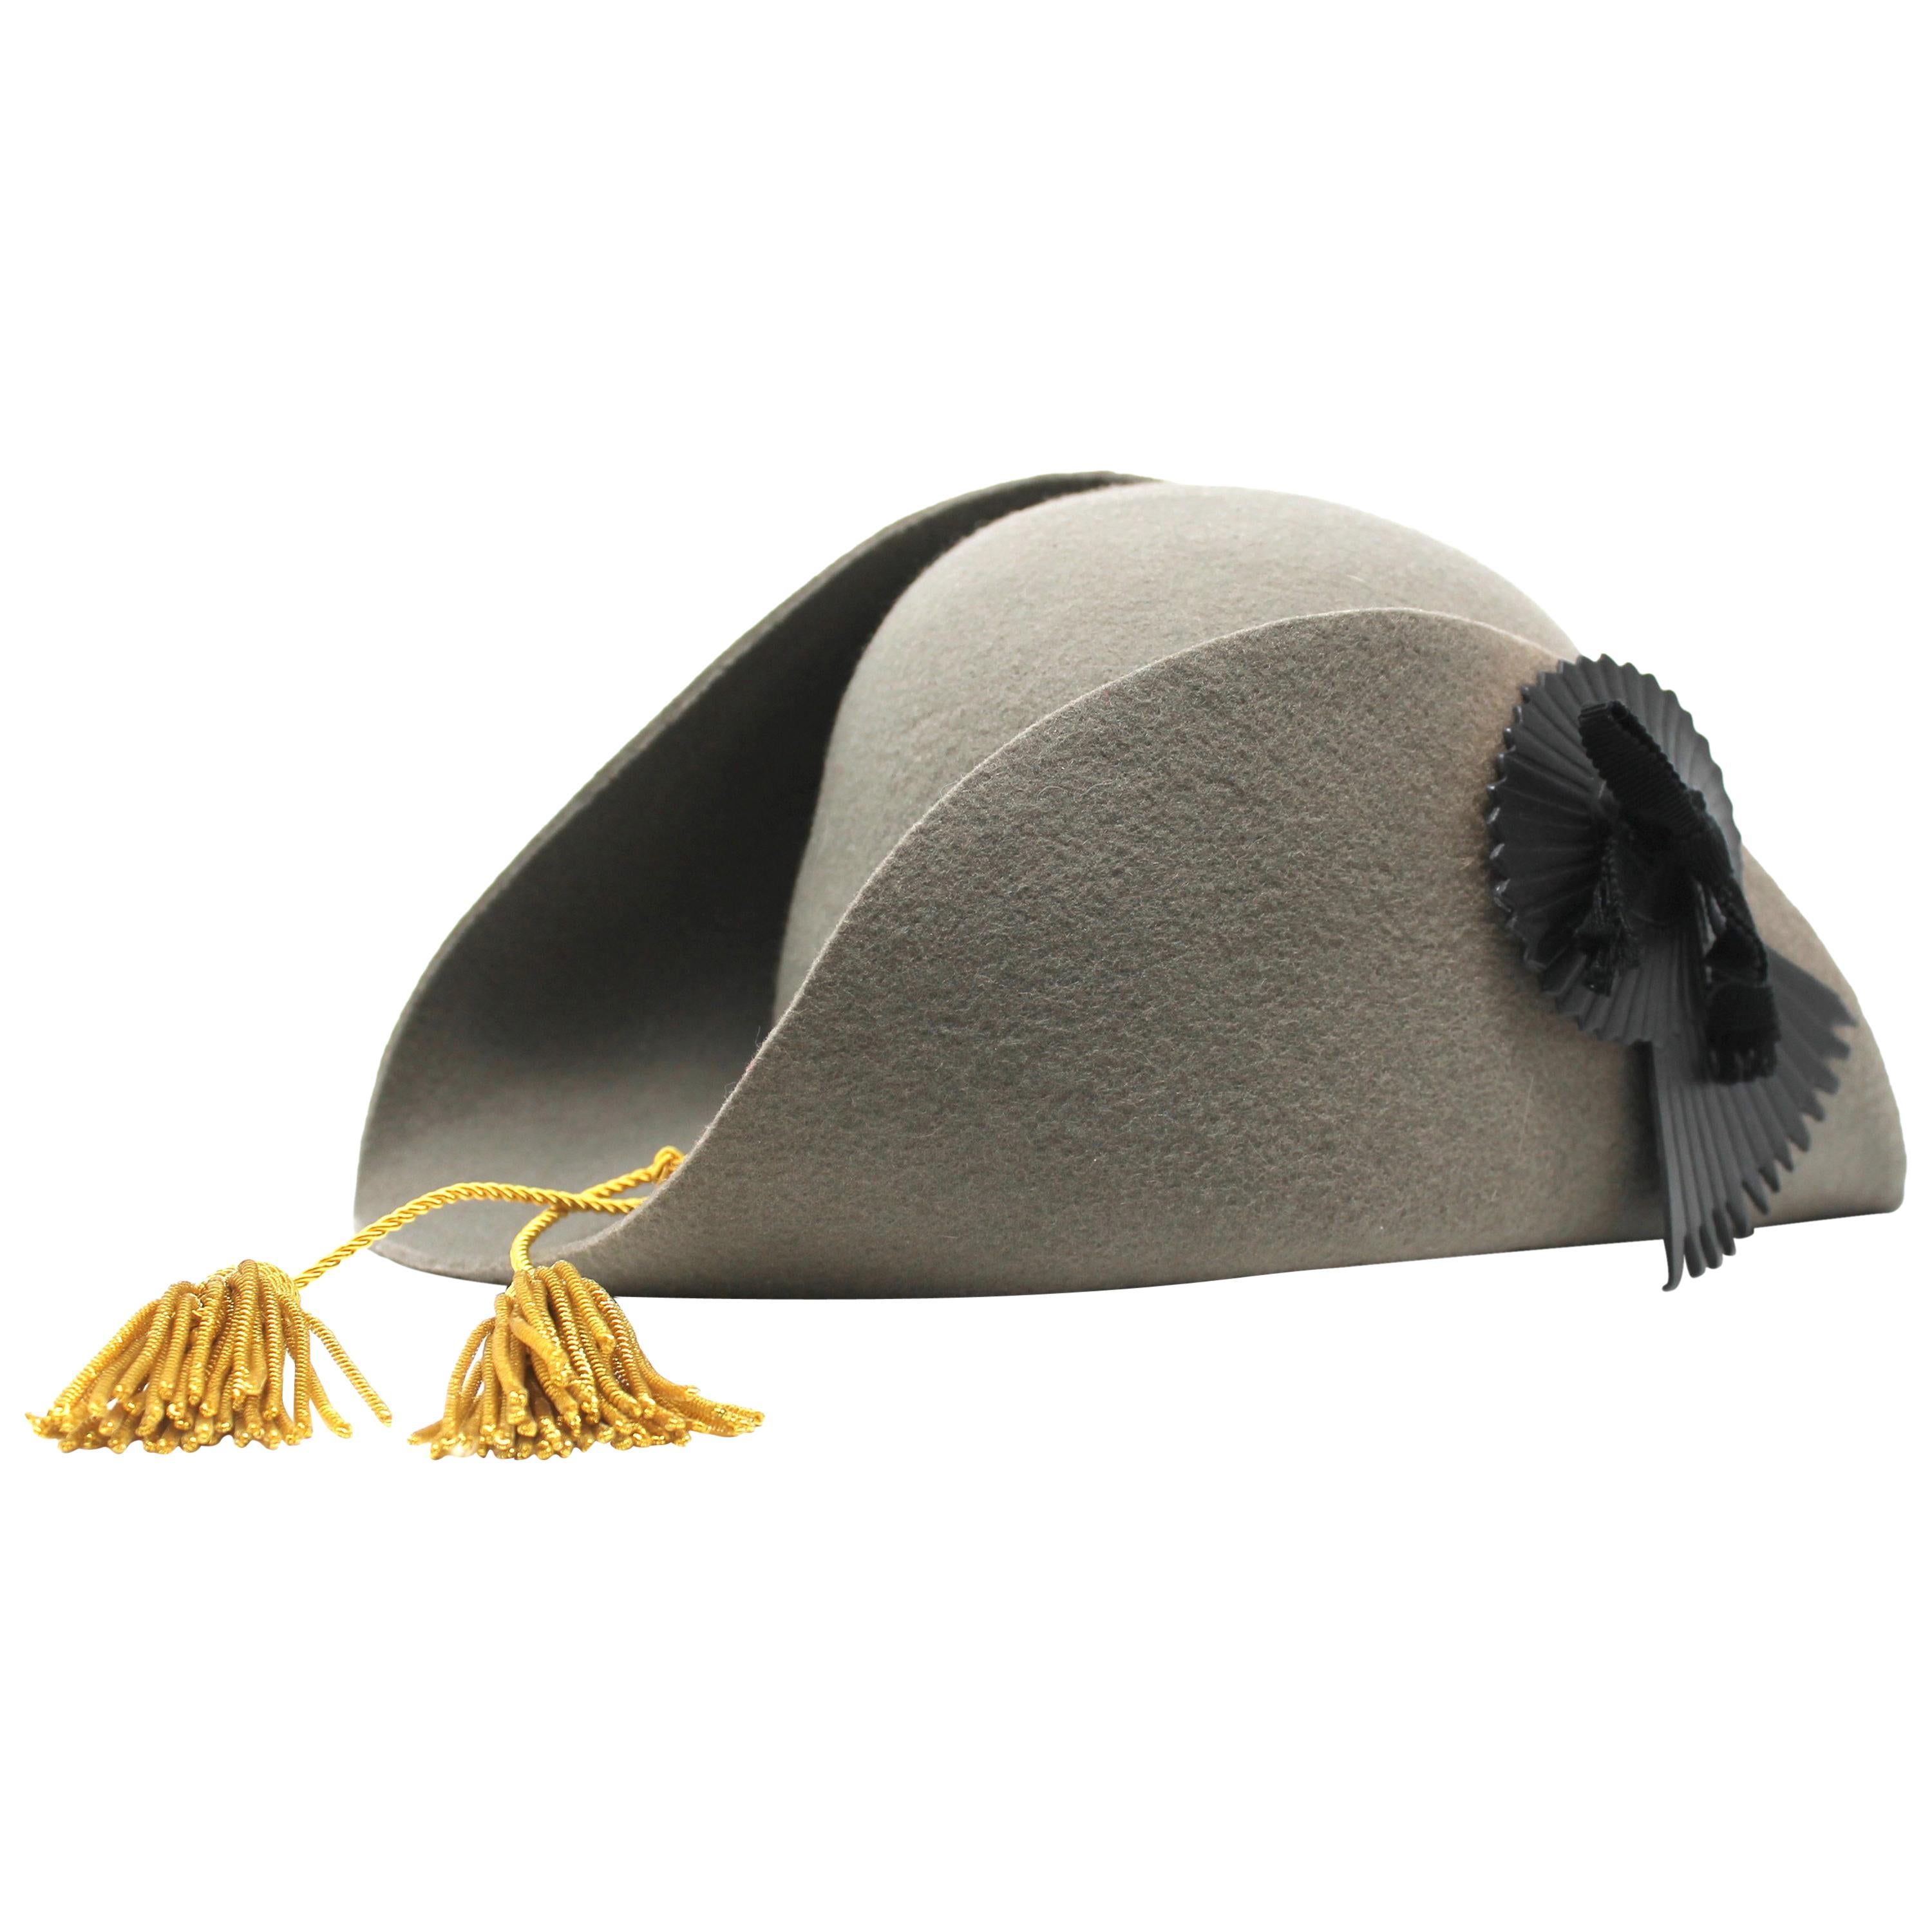 Vivienne Westwood Grey Pirate Hat, AW 1981 reissue, Size US M